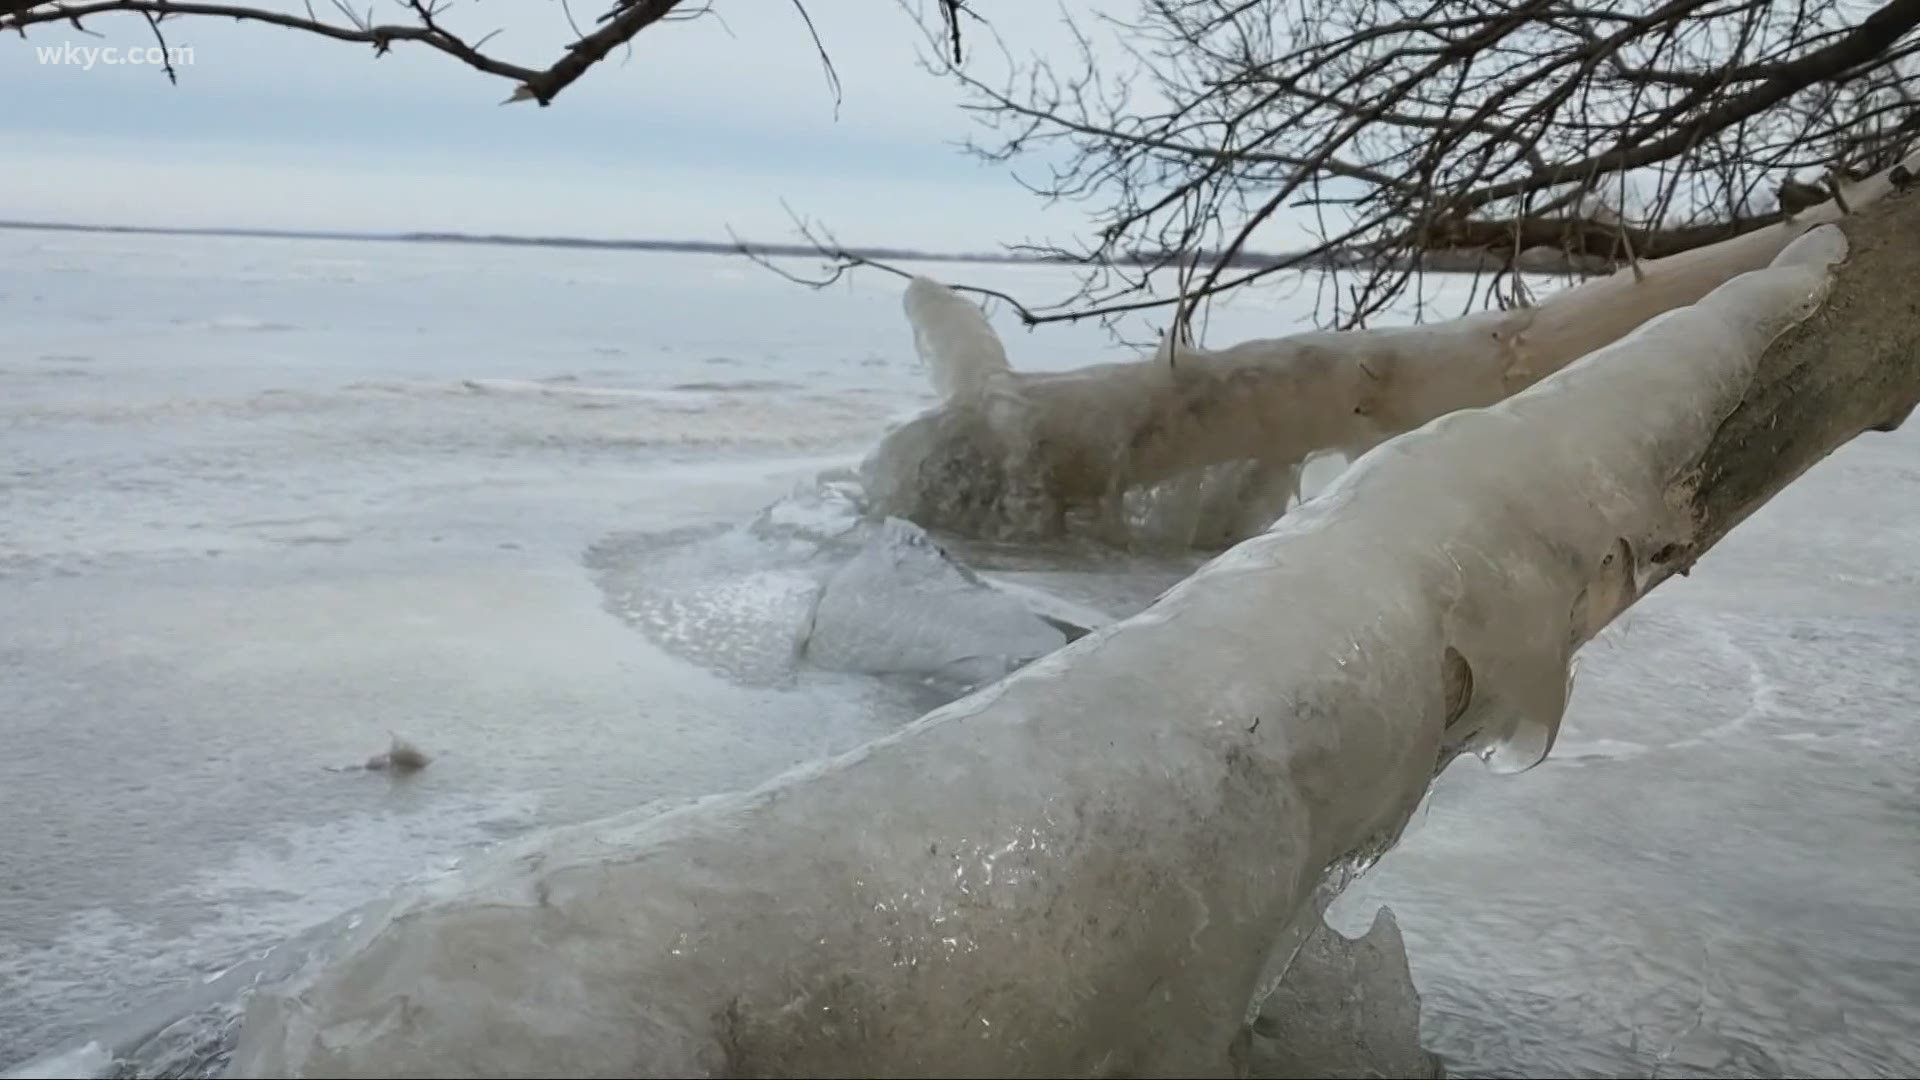 Feb. 5, 2021: In his latest GO-HIO adventure, 3News' Matt Standridge is exploring the ice on Lake Erie.